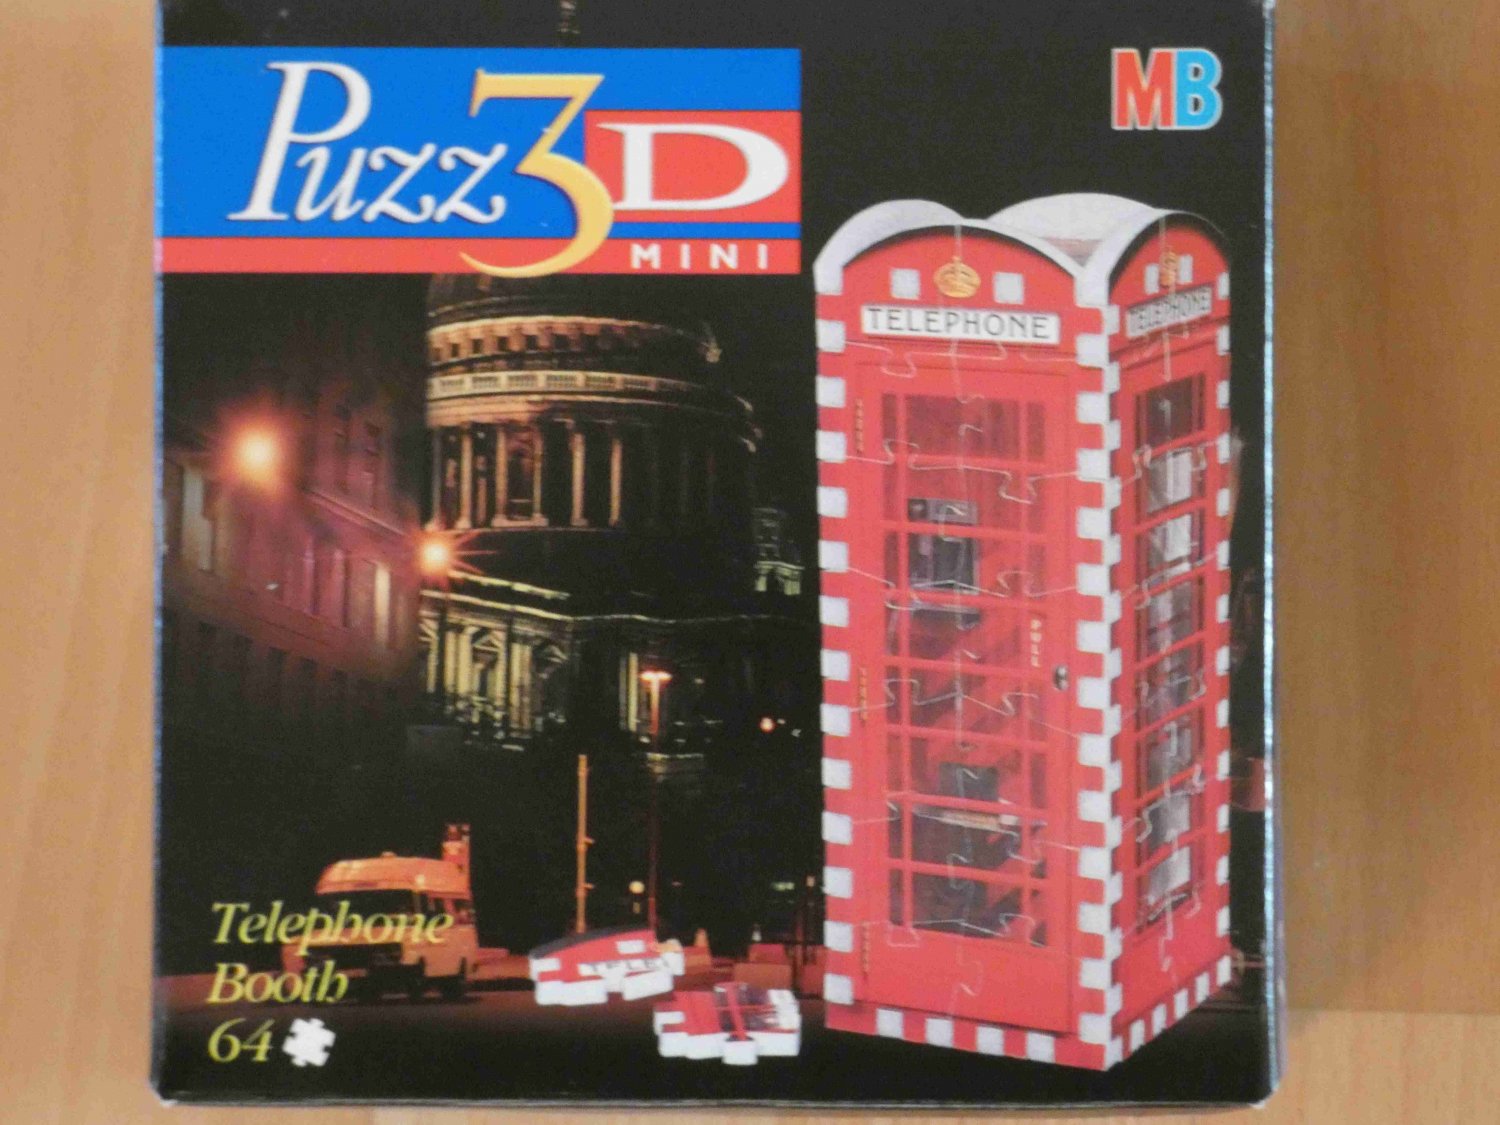 MB Puzzle 3D mini puzz3d TELEPHONE BOOTH CABINA TELEFONICA 64 pezzi pcs 